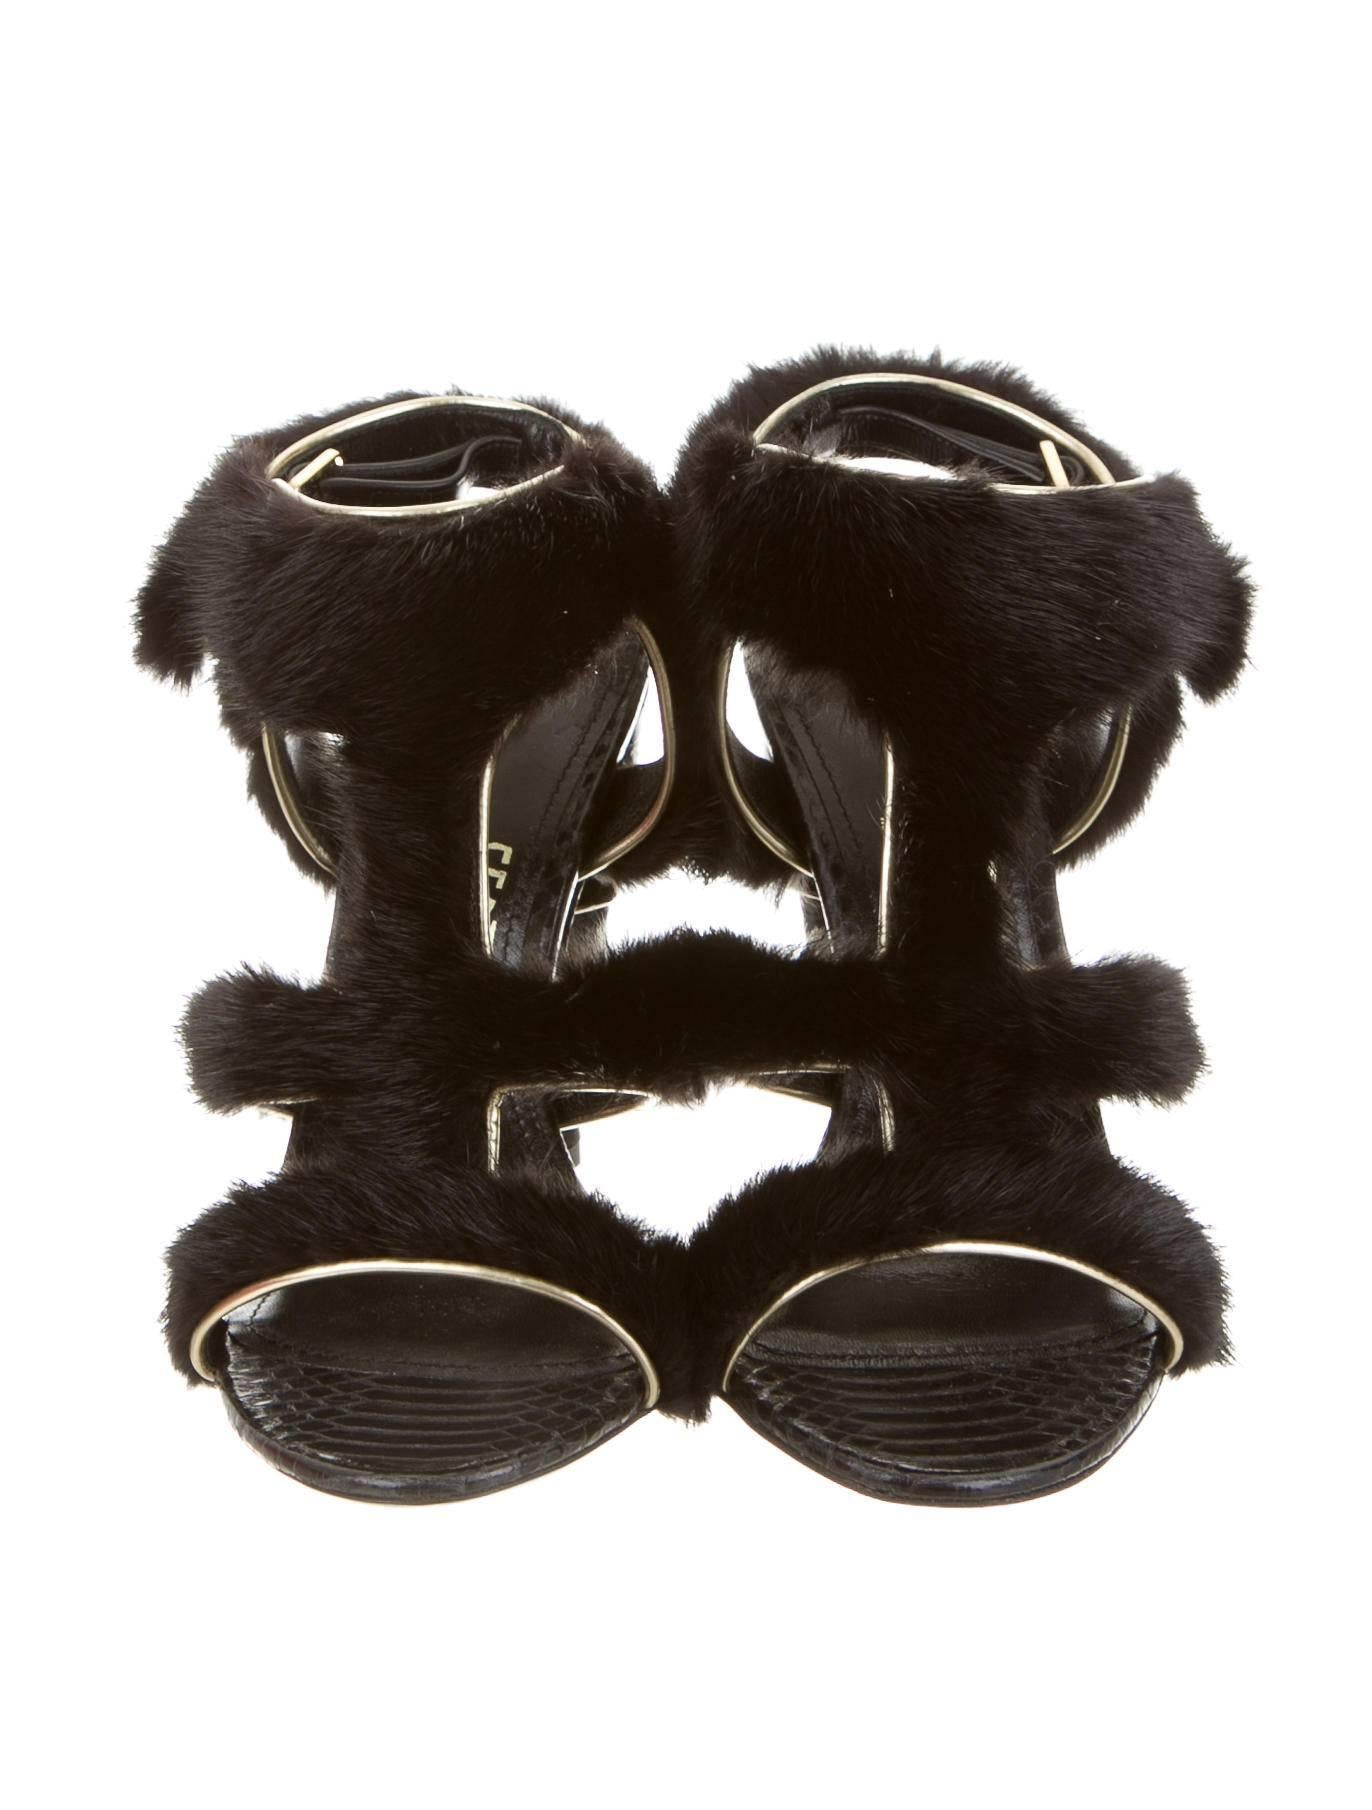 Women's Salvatore Ferragamo NEW & RARE Black Mink Python Cut Out Sandals Heels in Box